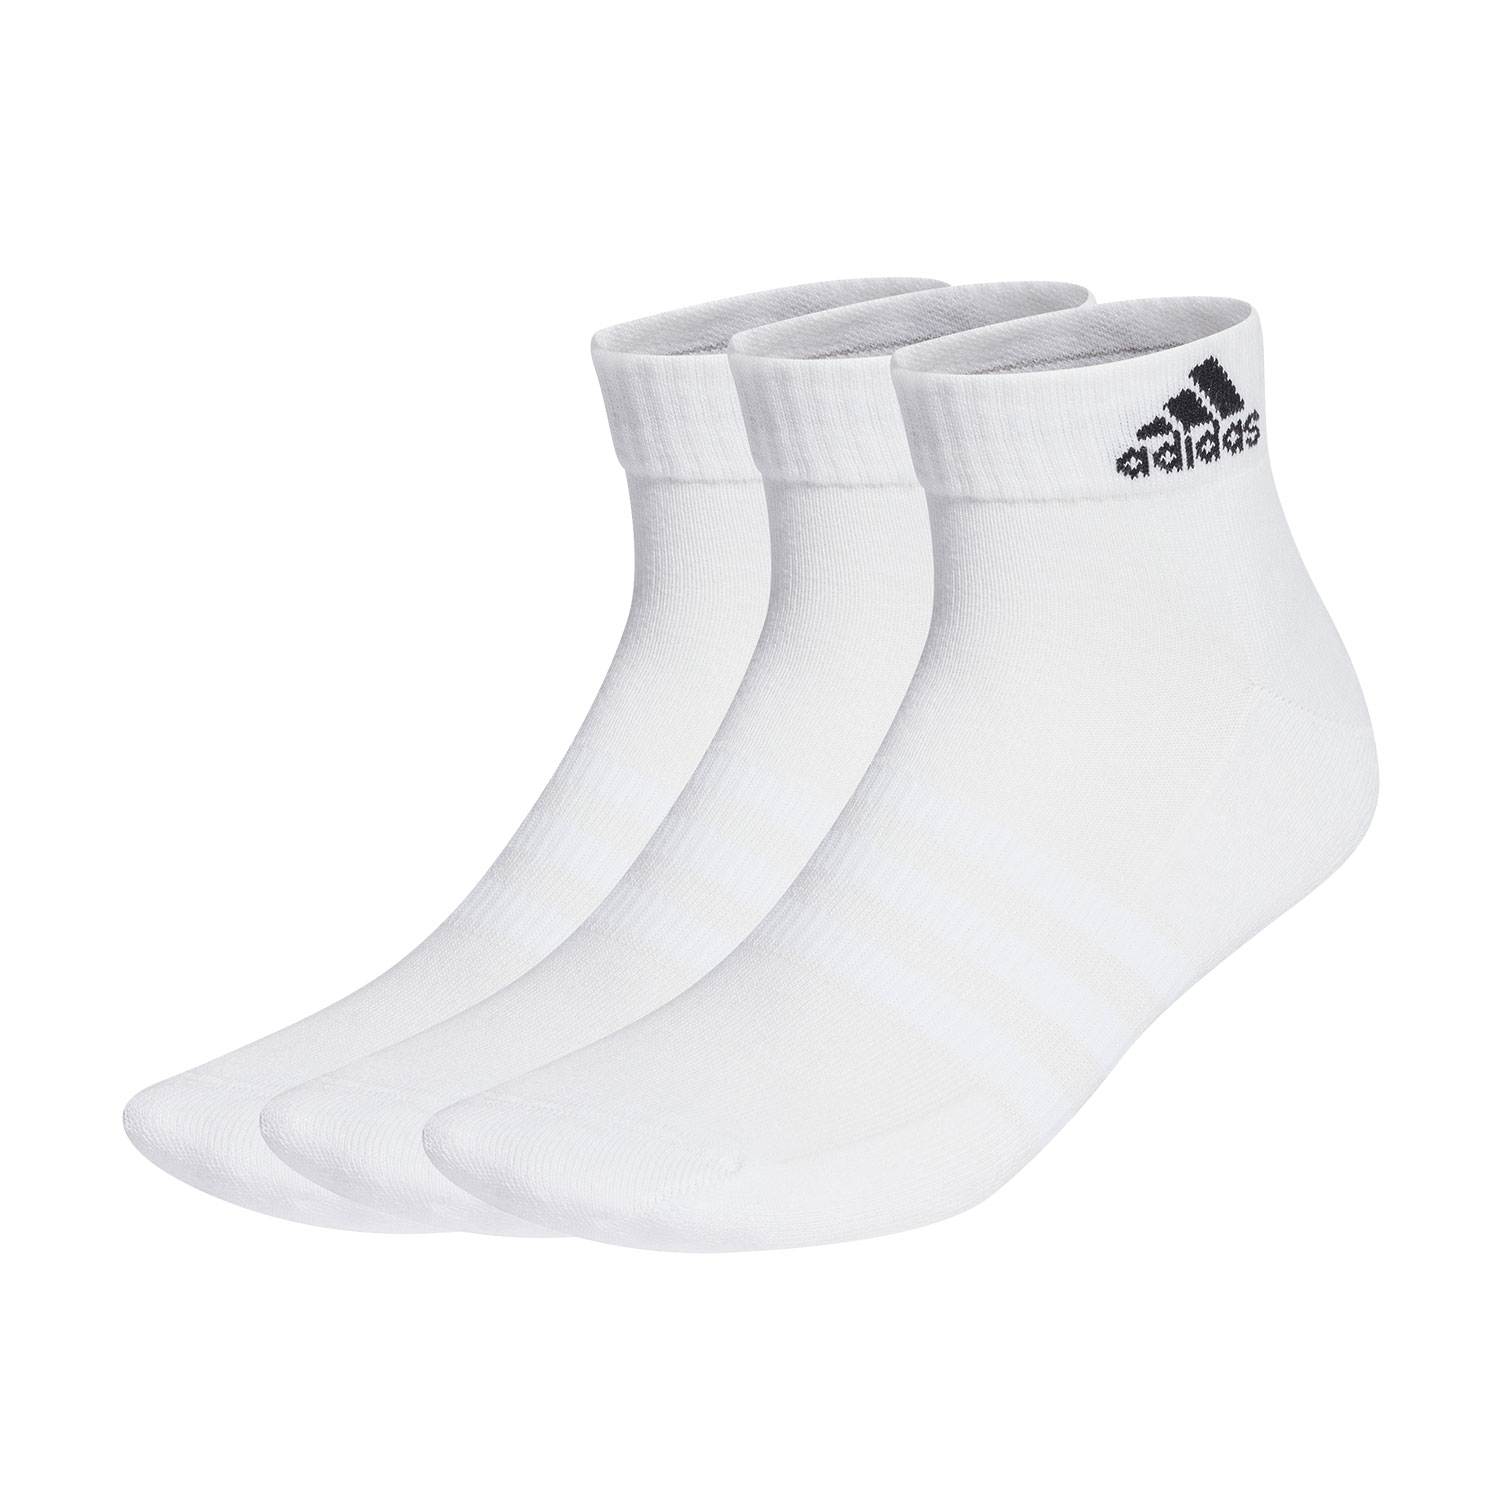 adidas Pro x 3 Socks - White/Black